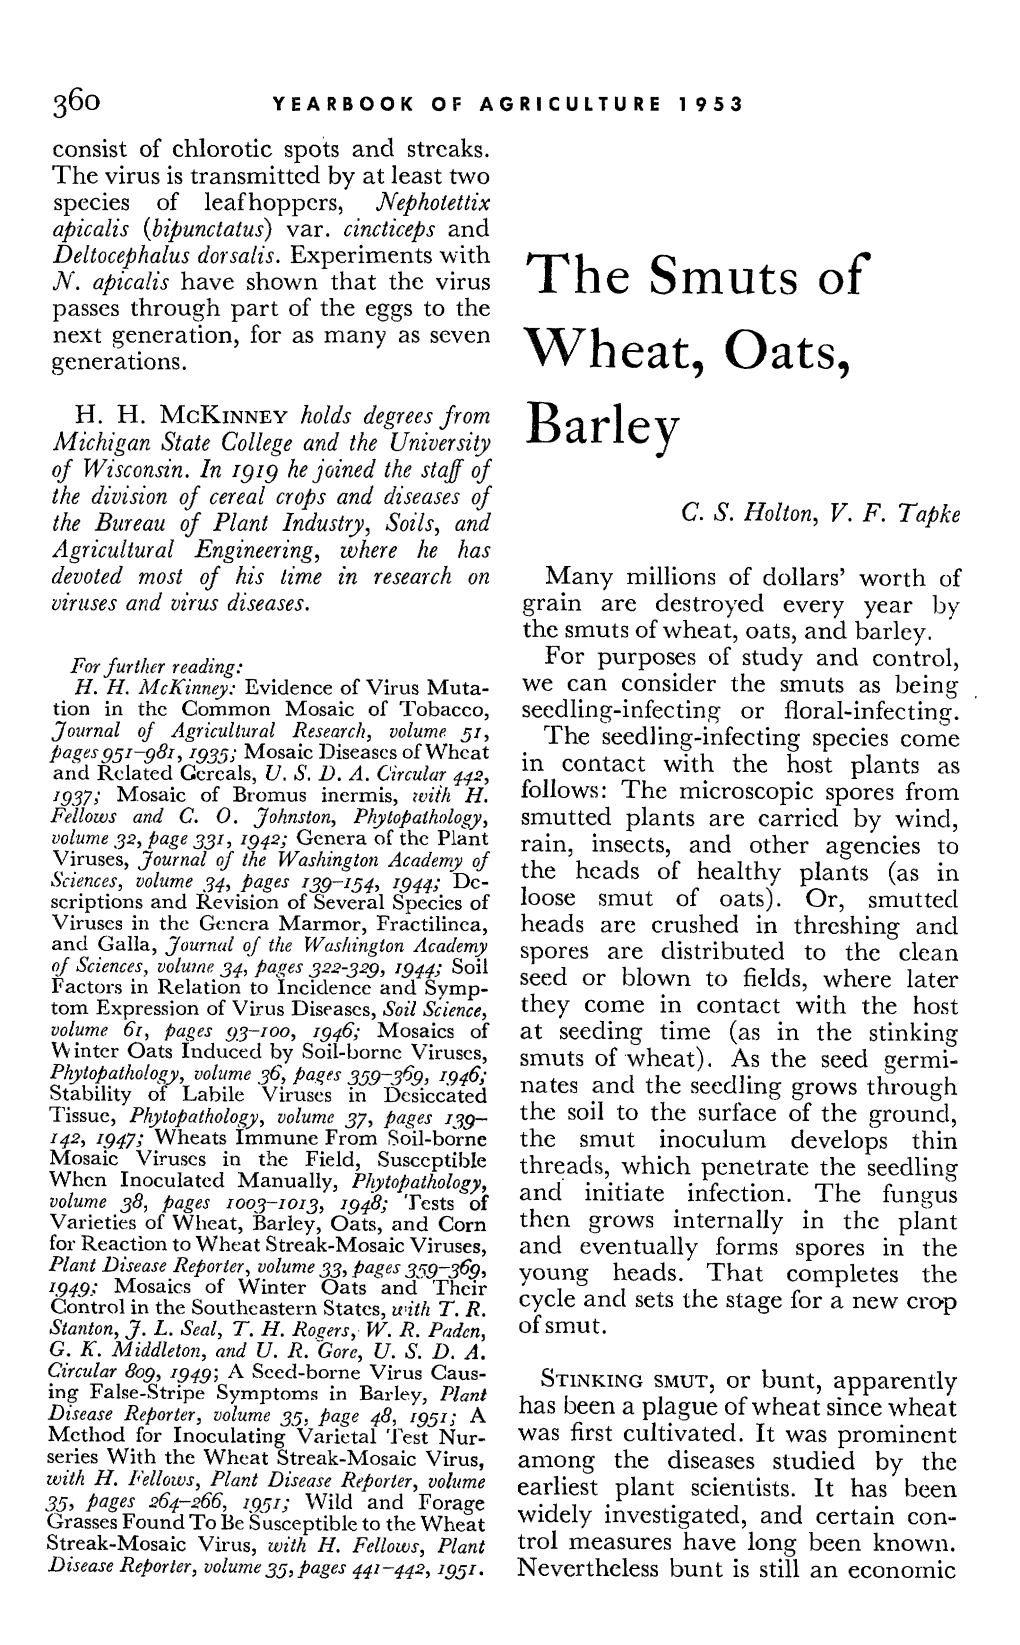 The Smuts of Wheat, Oats, Barley